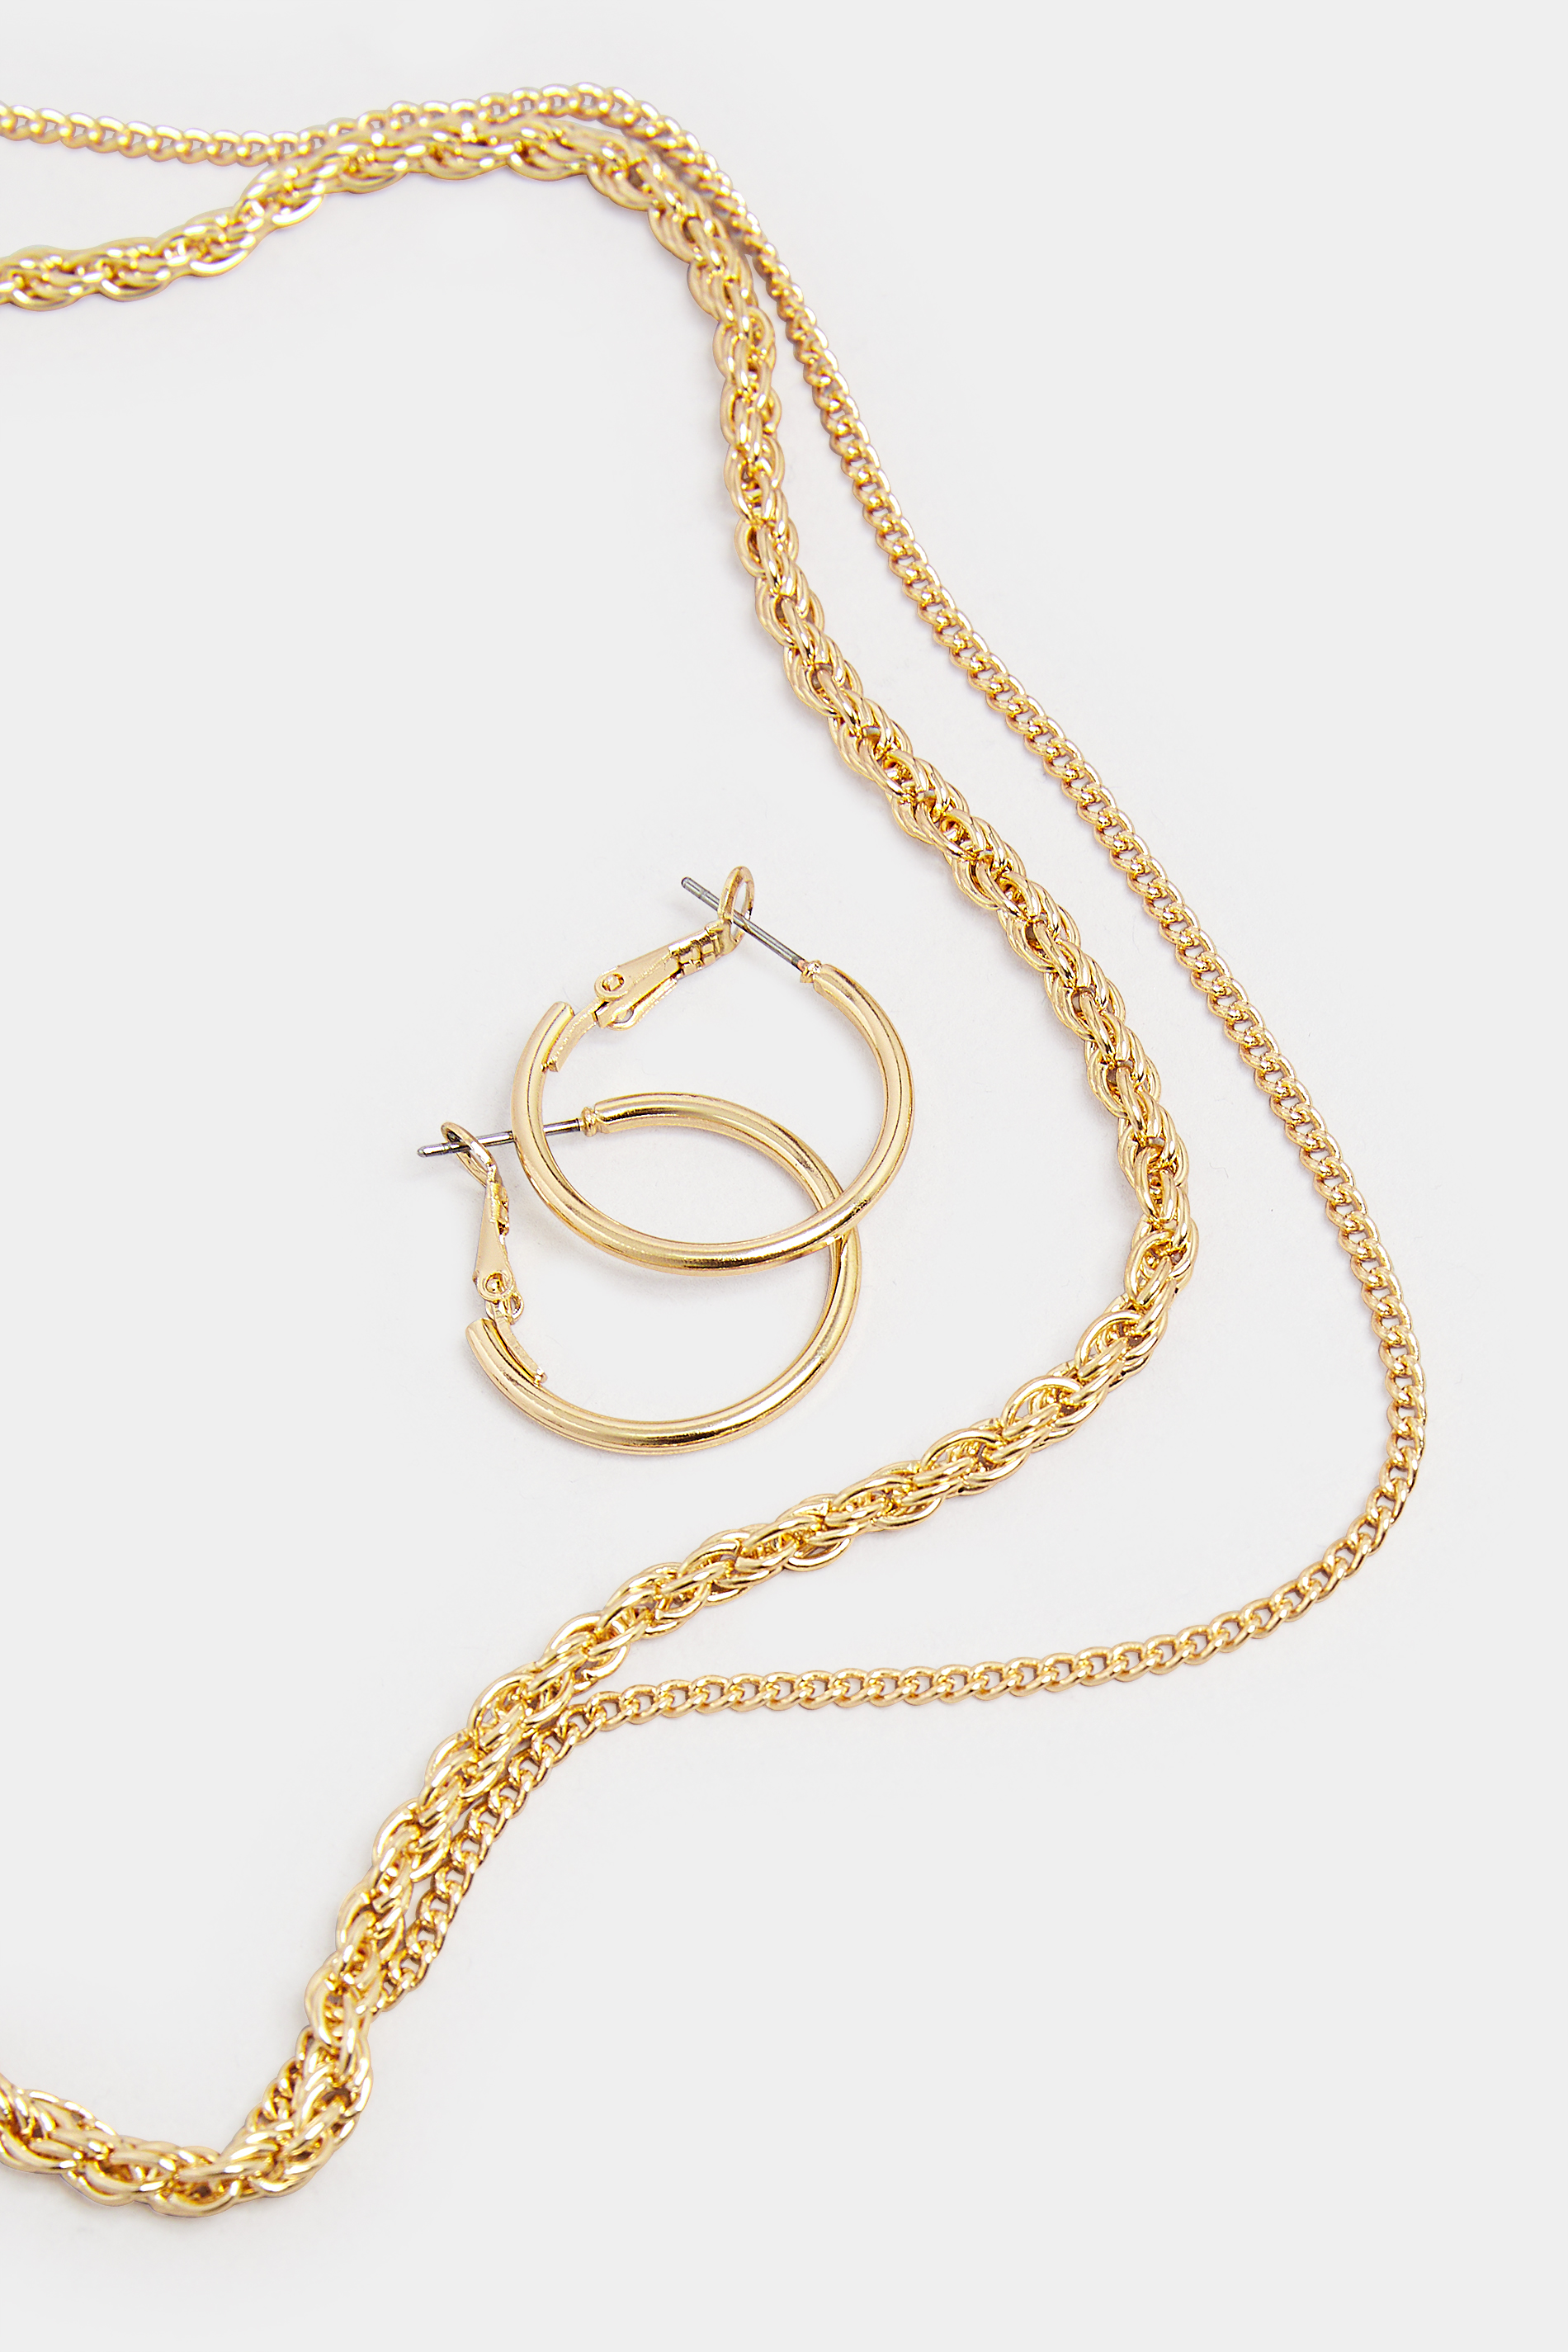 Buy wholesale Layered Chain Bra Body Jewellery in Gold